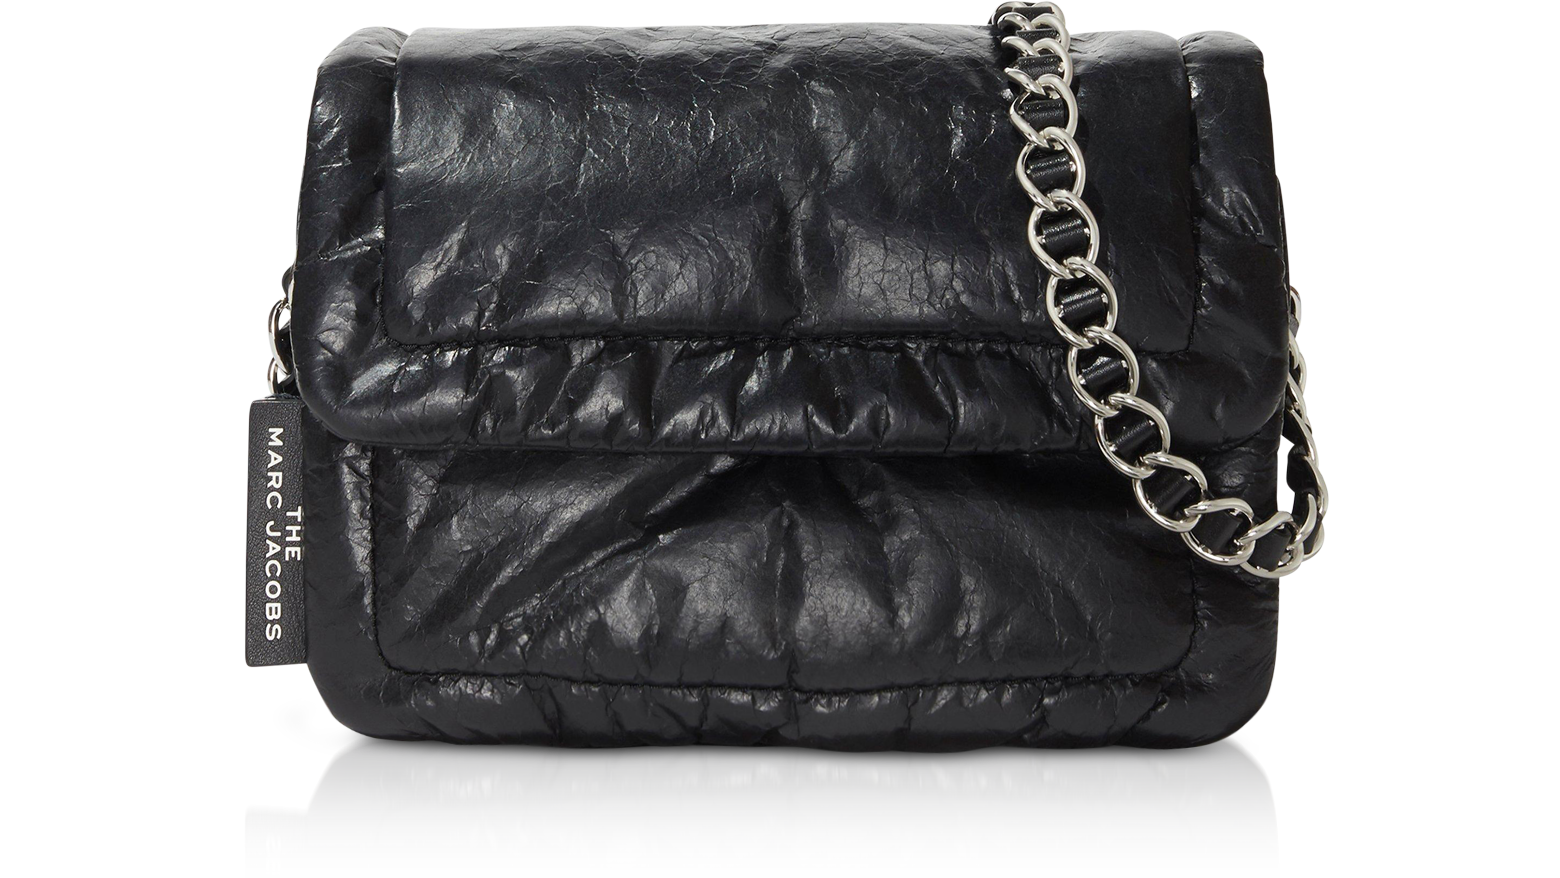 The Mini Pillow Leather Crossbody Bag